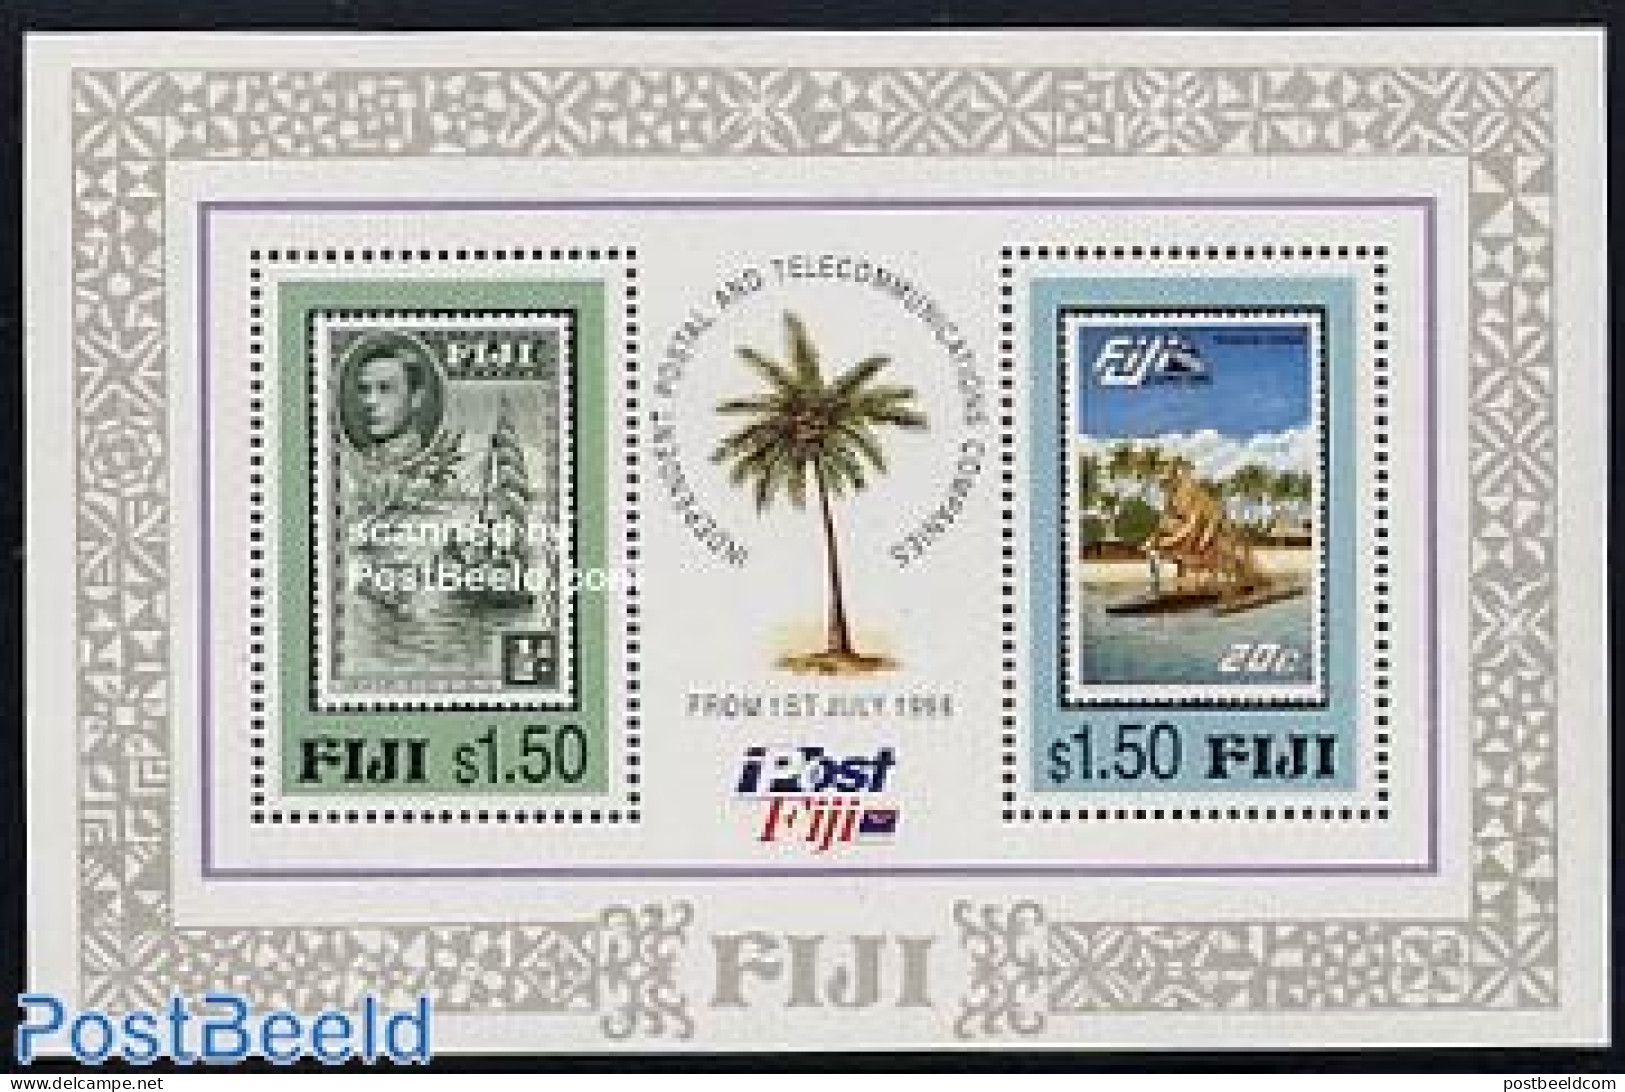 Fiji 1996 Post & Telecommunication S/s, Mint NH, Transport - Stamps On Stamps - Ships And Boats - Briefmarken Auf Briefmarken